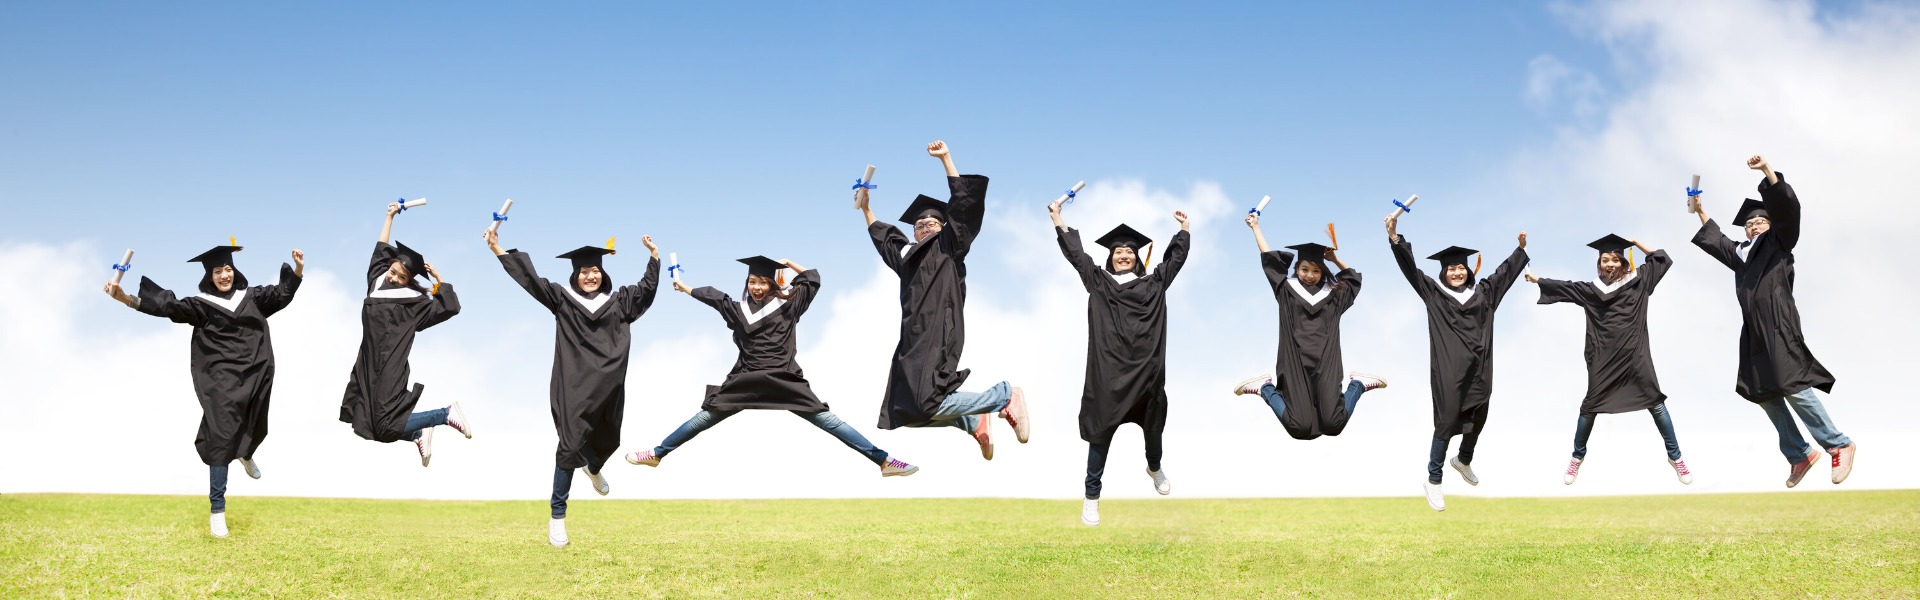 Graduates Jumping